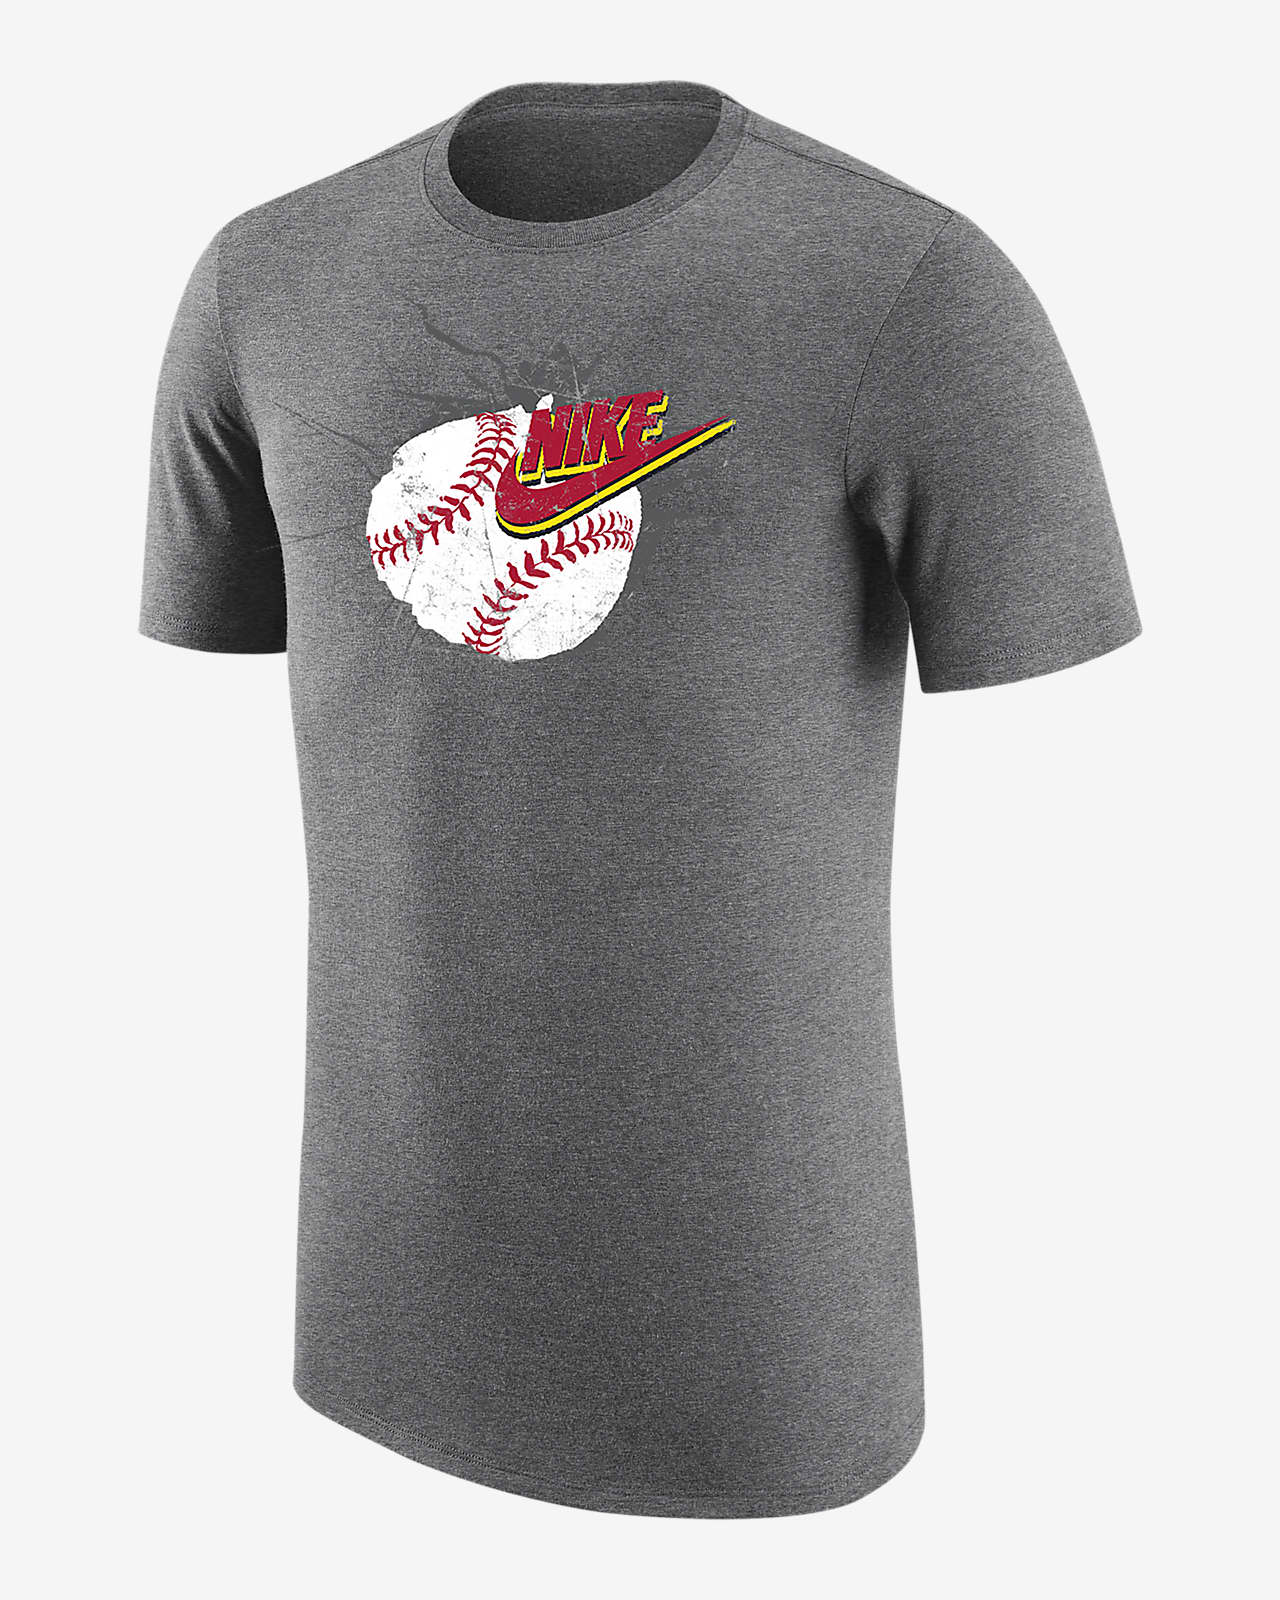 Nike Sportswear Men's Baseball T-Shirt